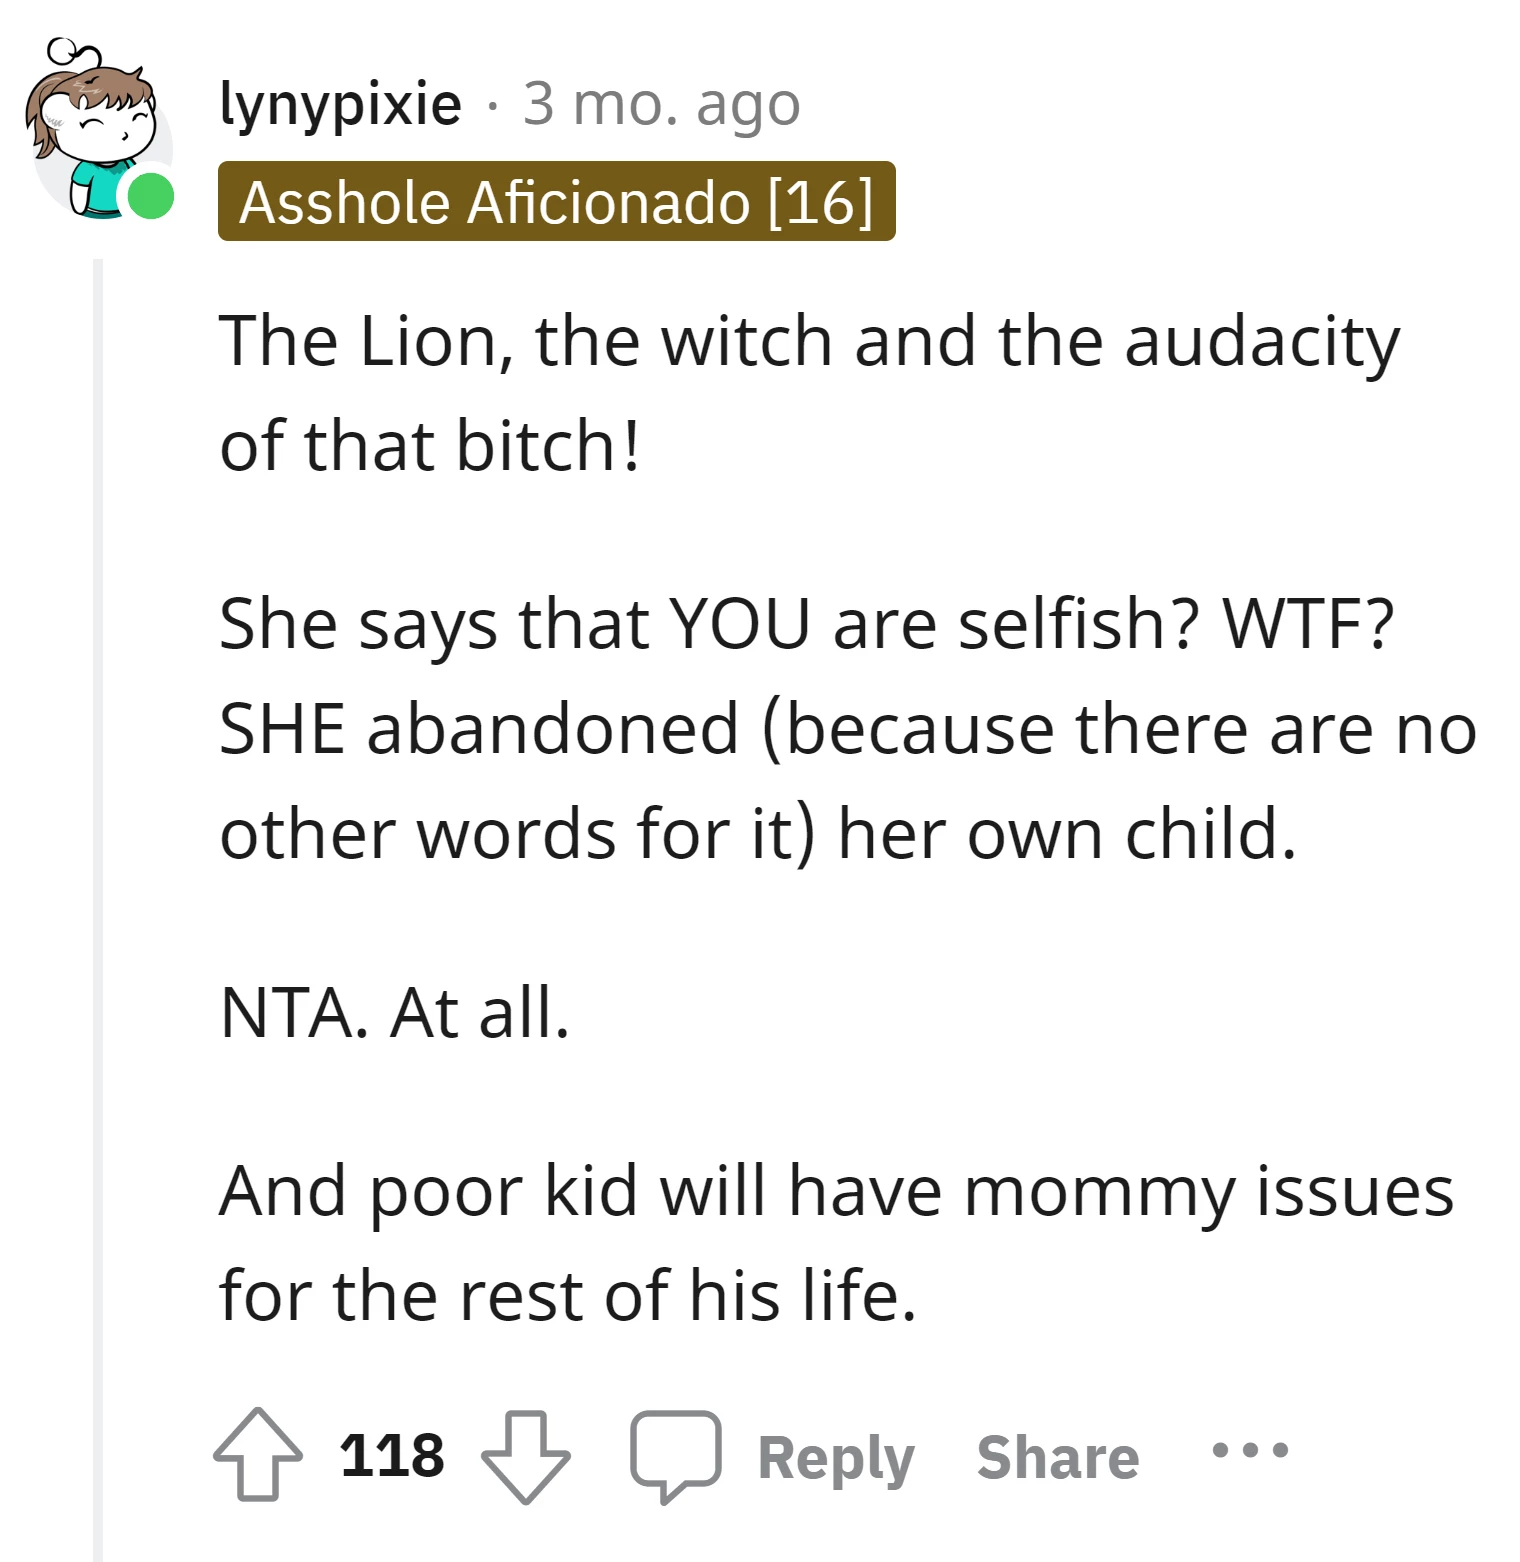 lynypixie's comment